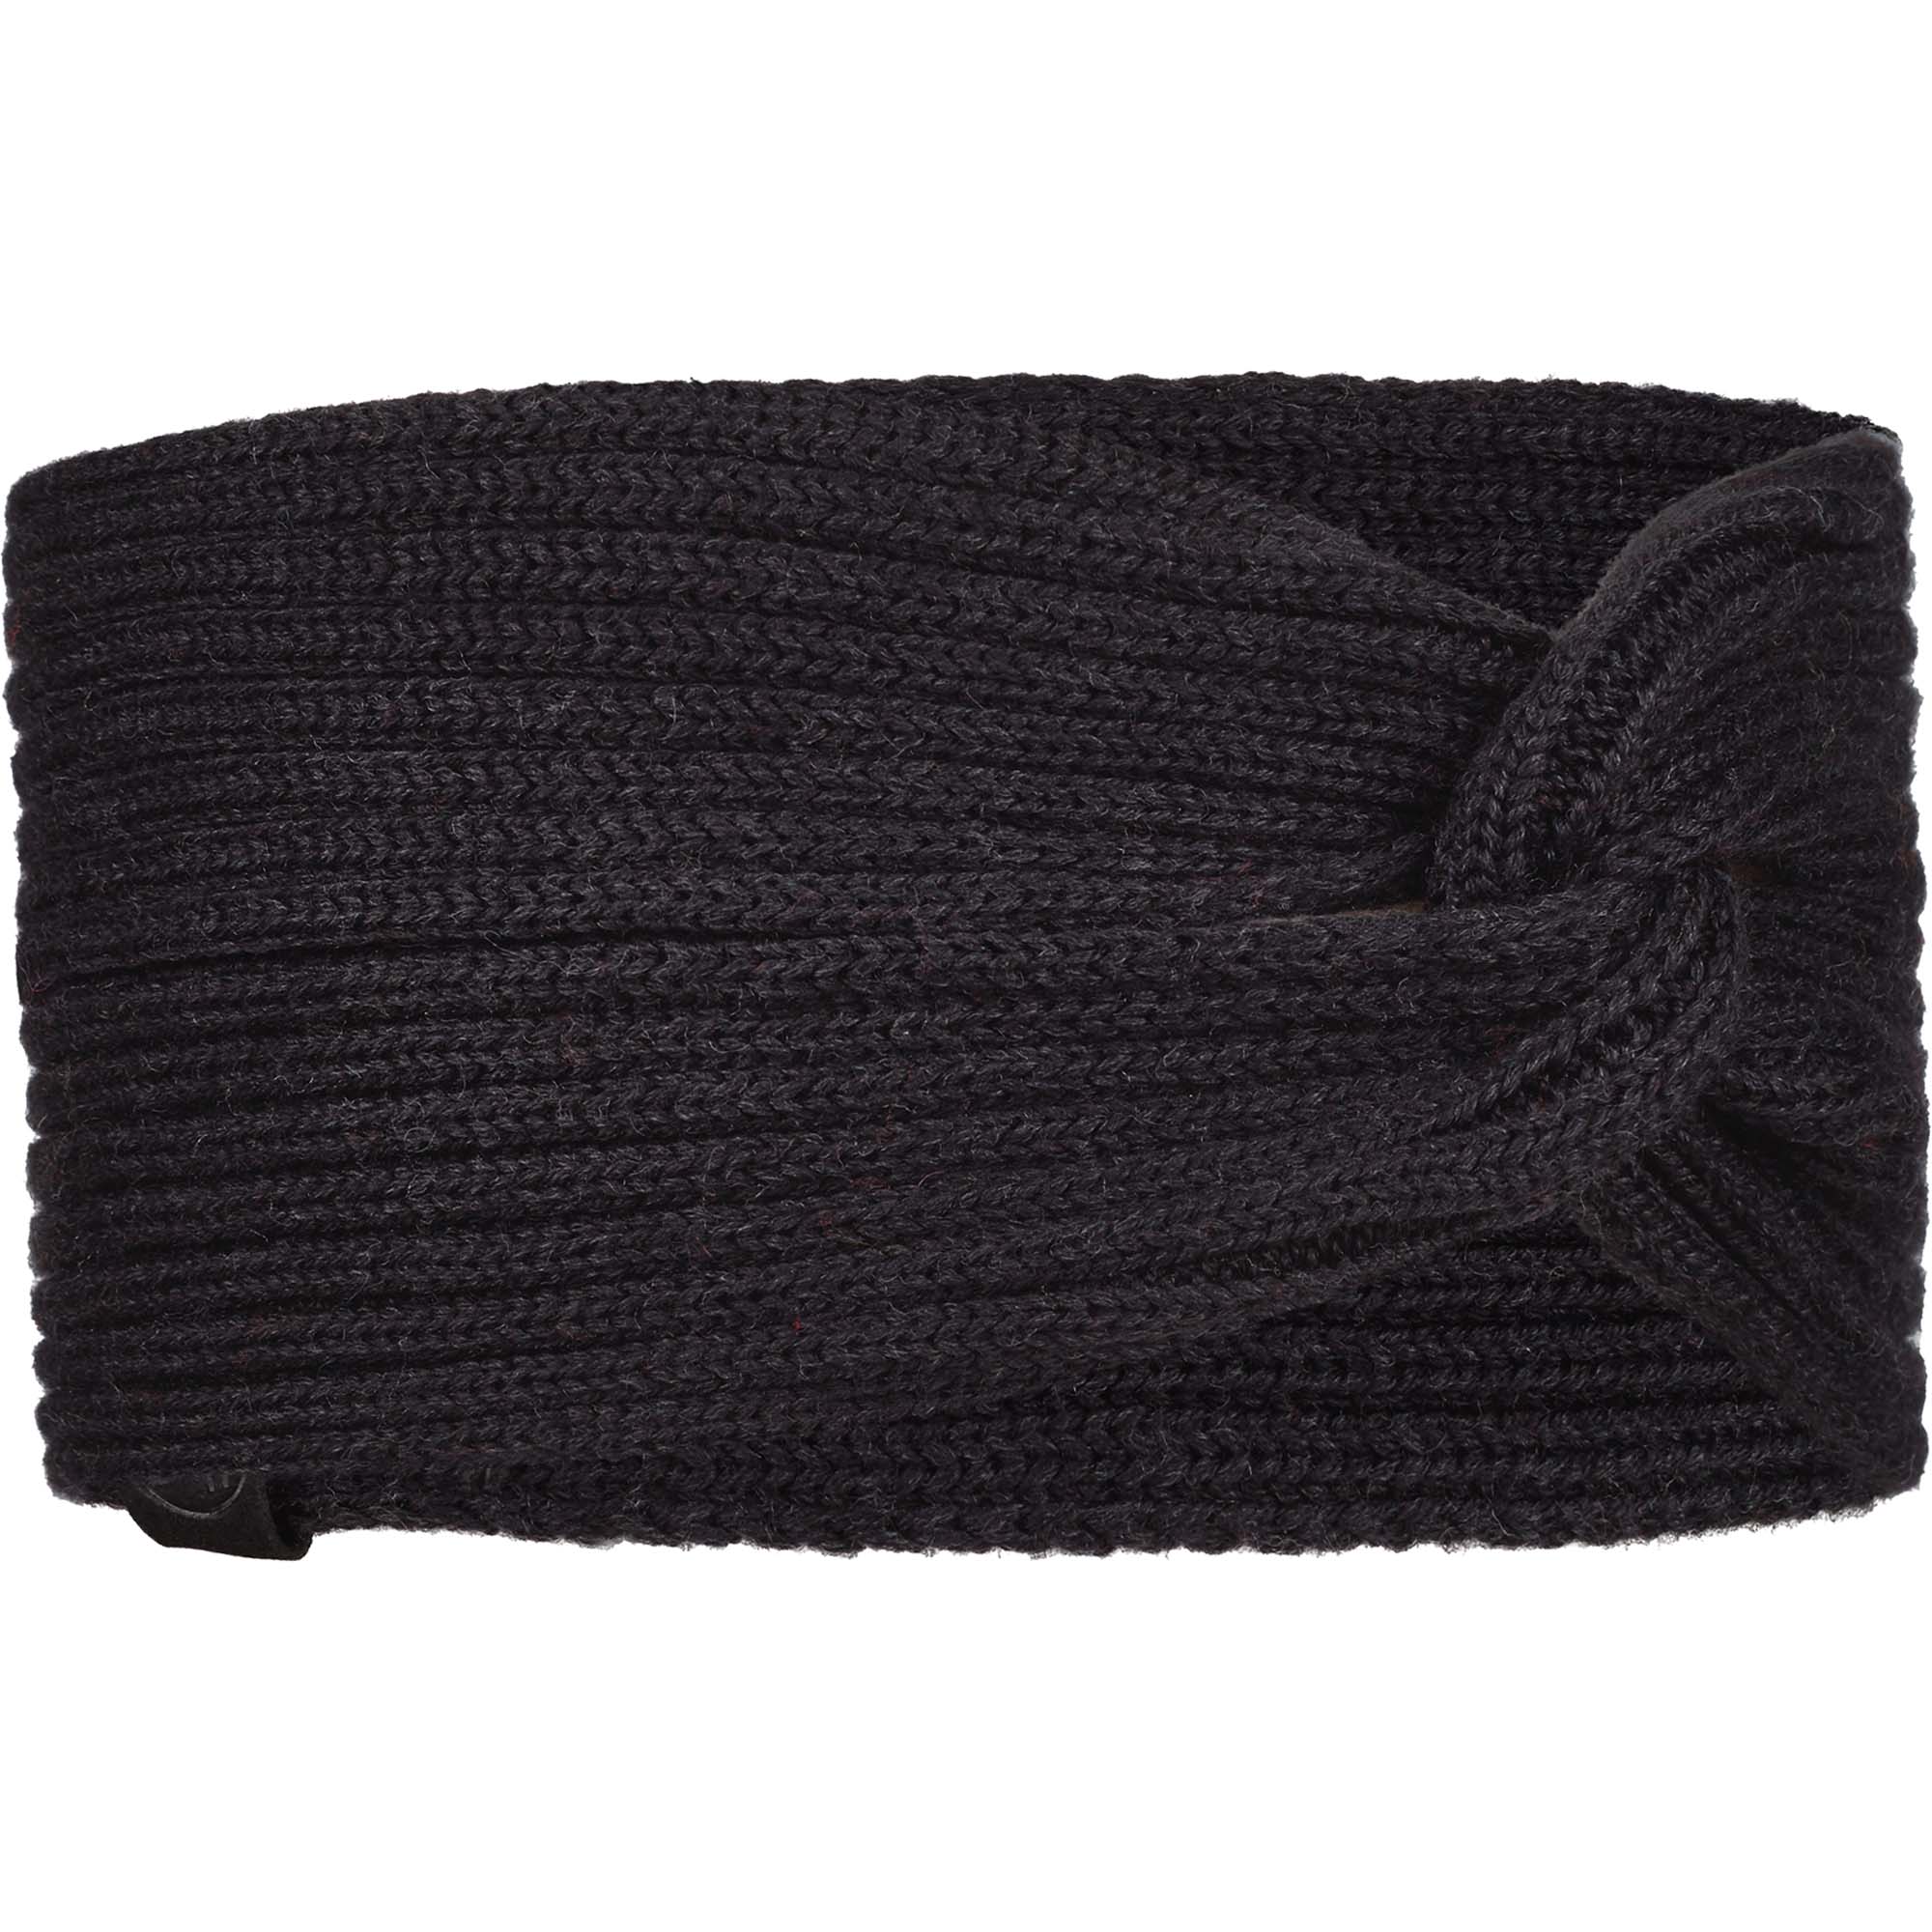 Buff Norval Knitted Merino Wool Headband